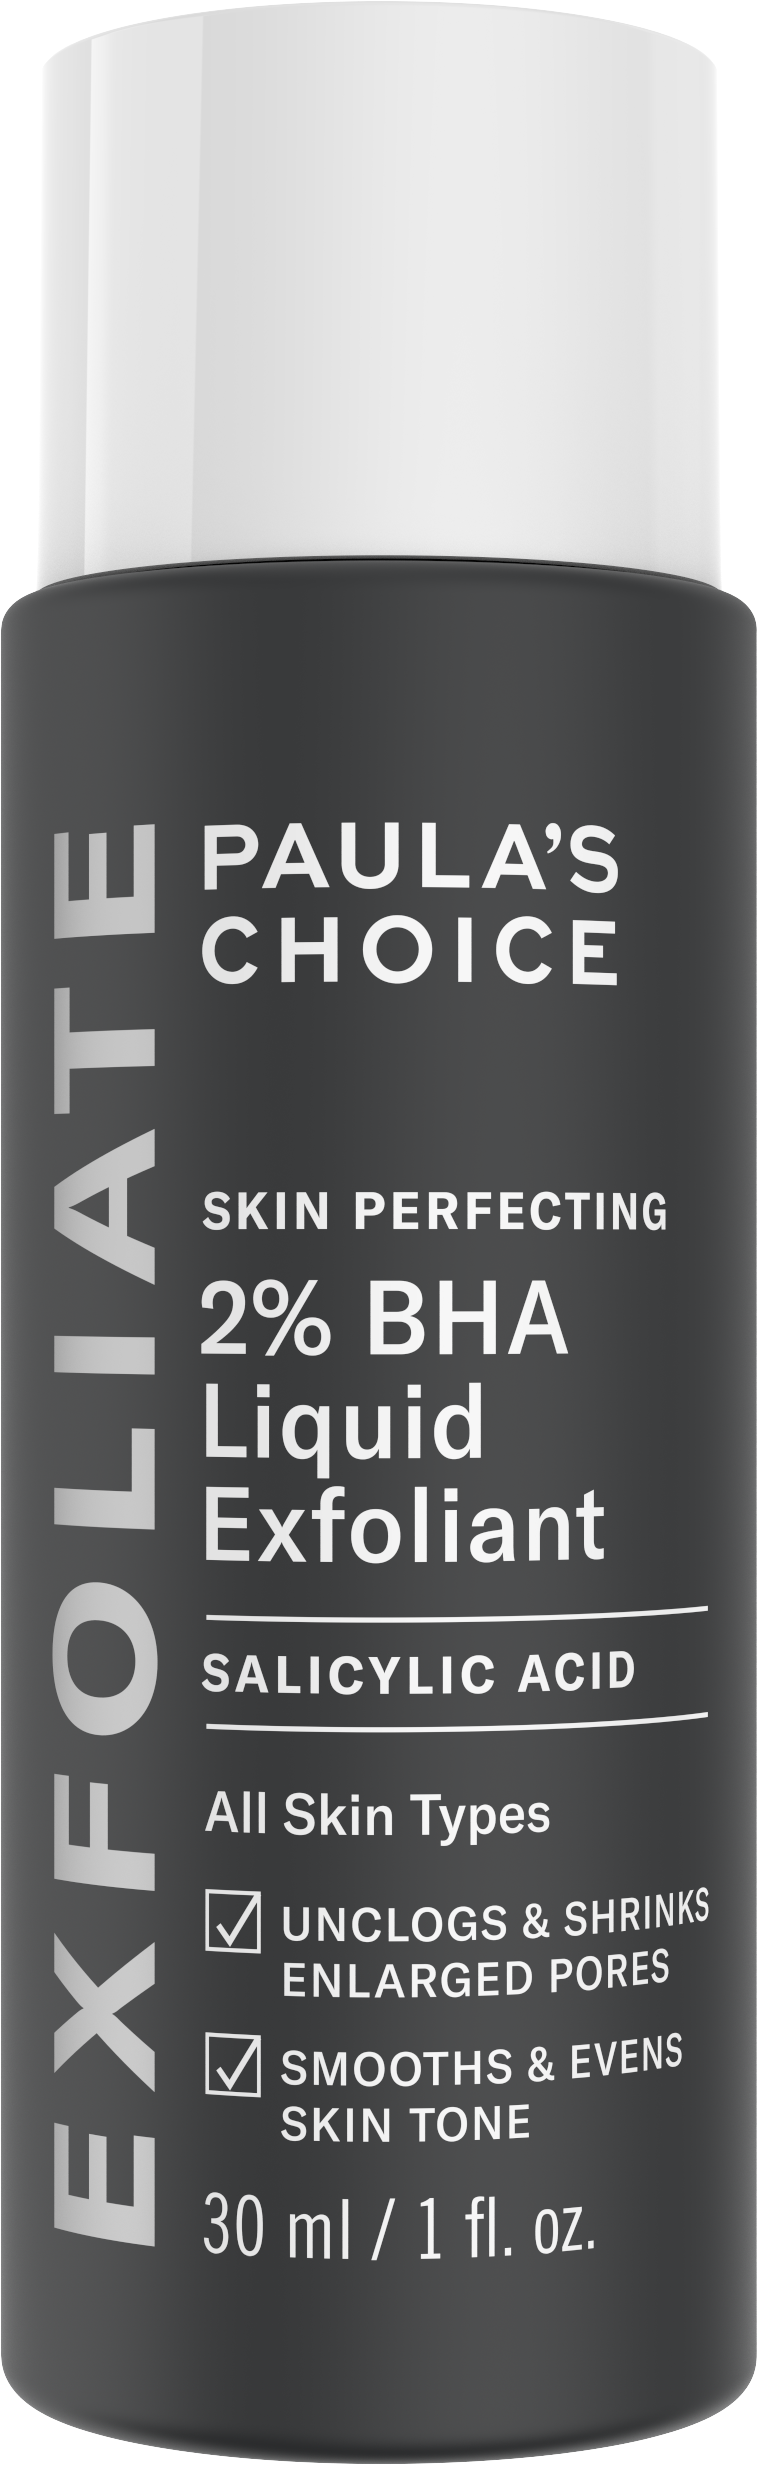 Paula's Choice BHA Exfoliant - Trial Size